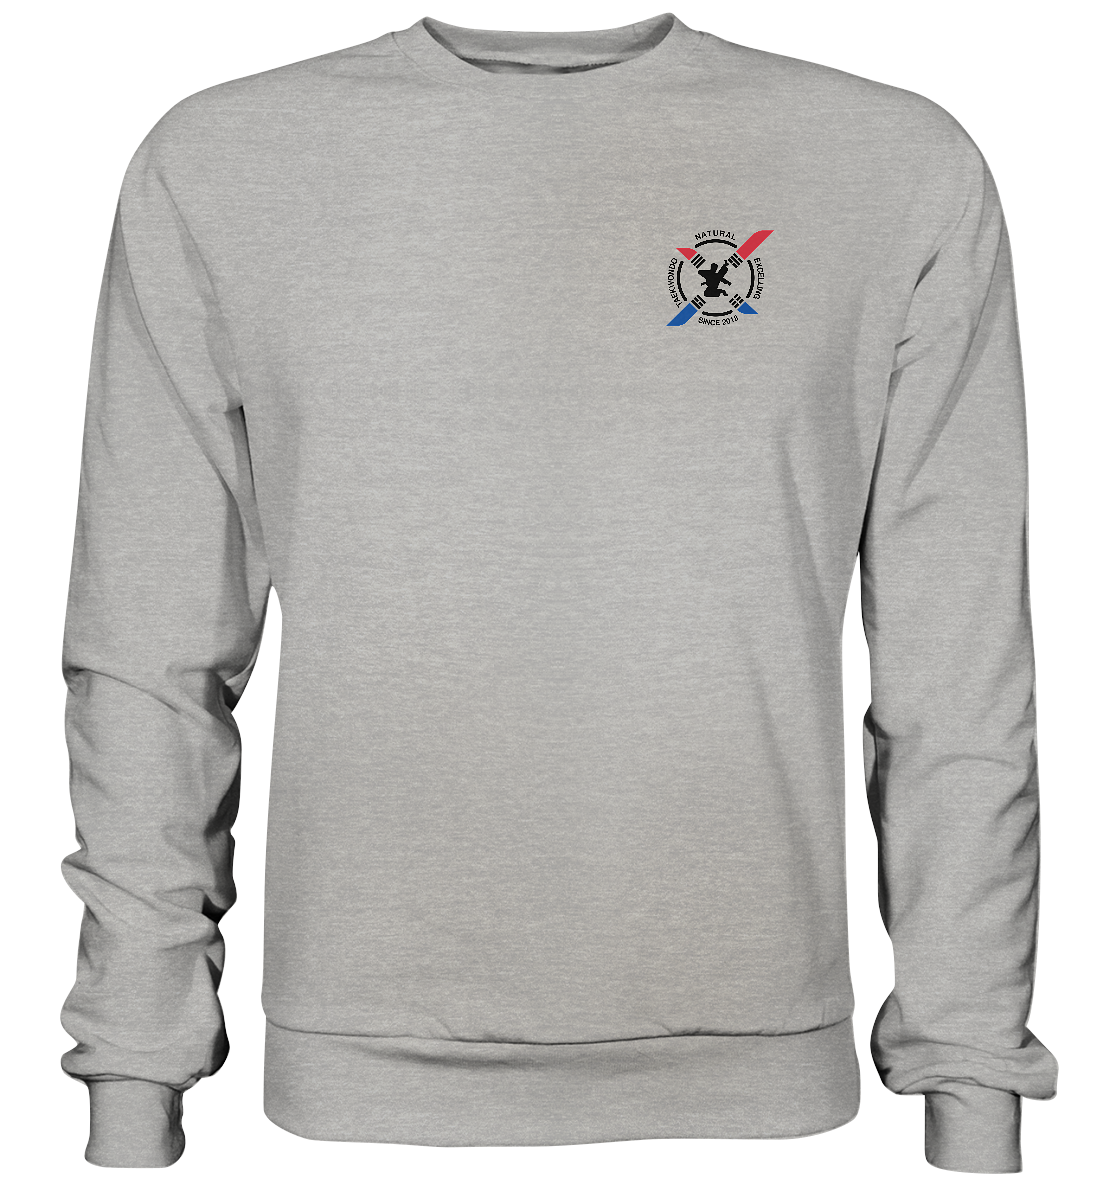 NEXT TAEKWONDO - Team NExT - Basic Sweatshirt